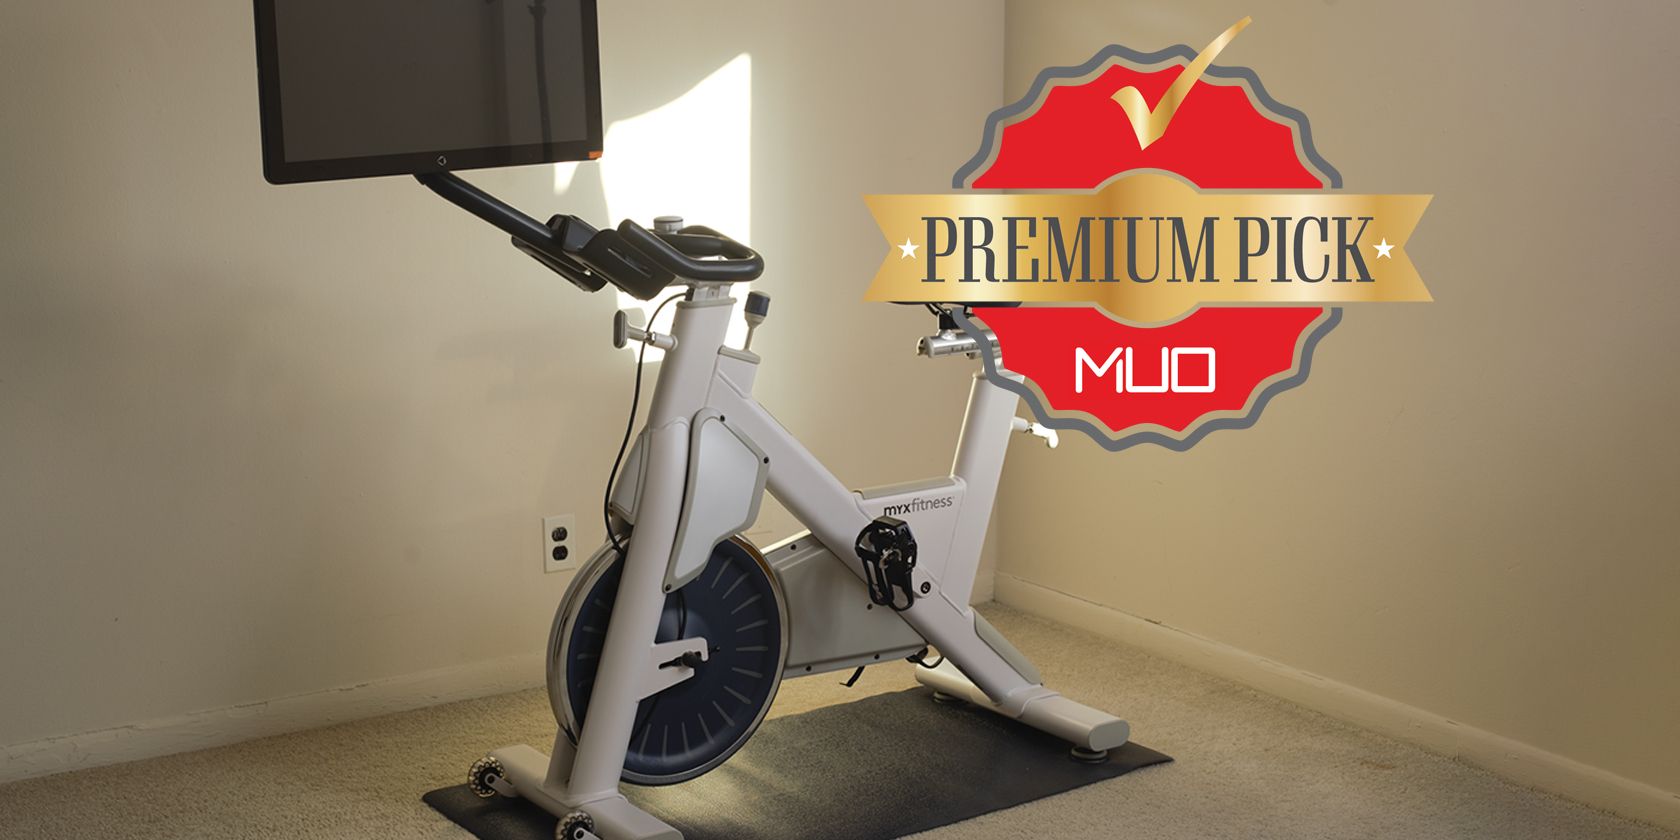 myx ii fitness bike award premium